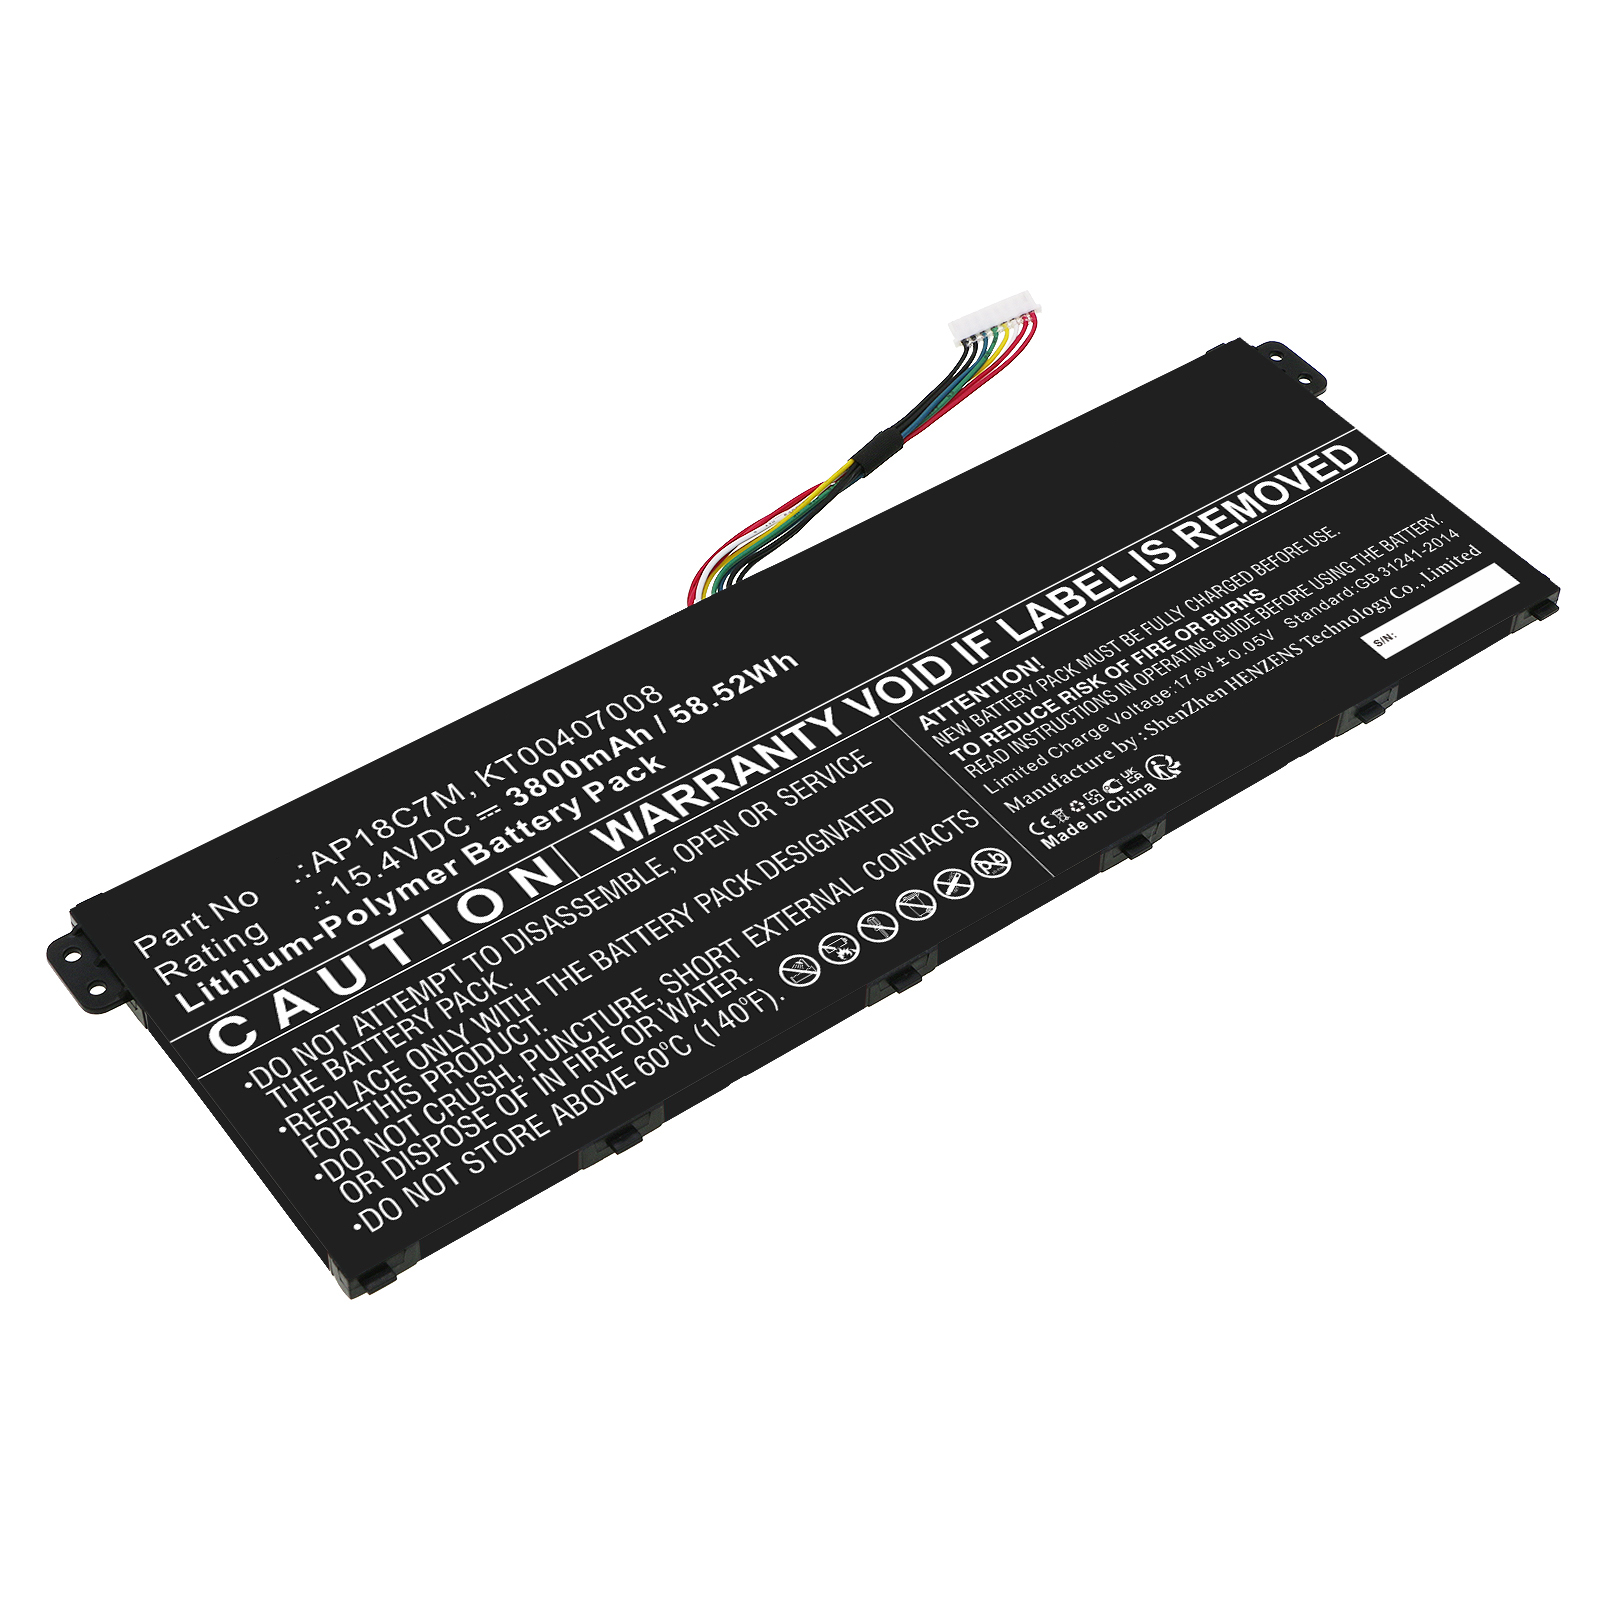 Synergy Digital Laptop Battery, Compatible with Acer AP18C7M Laptop Battery (Li-Pol, 15.4V, 3800mAh)